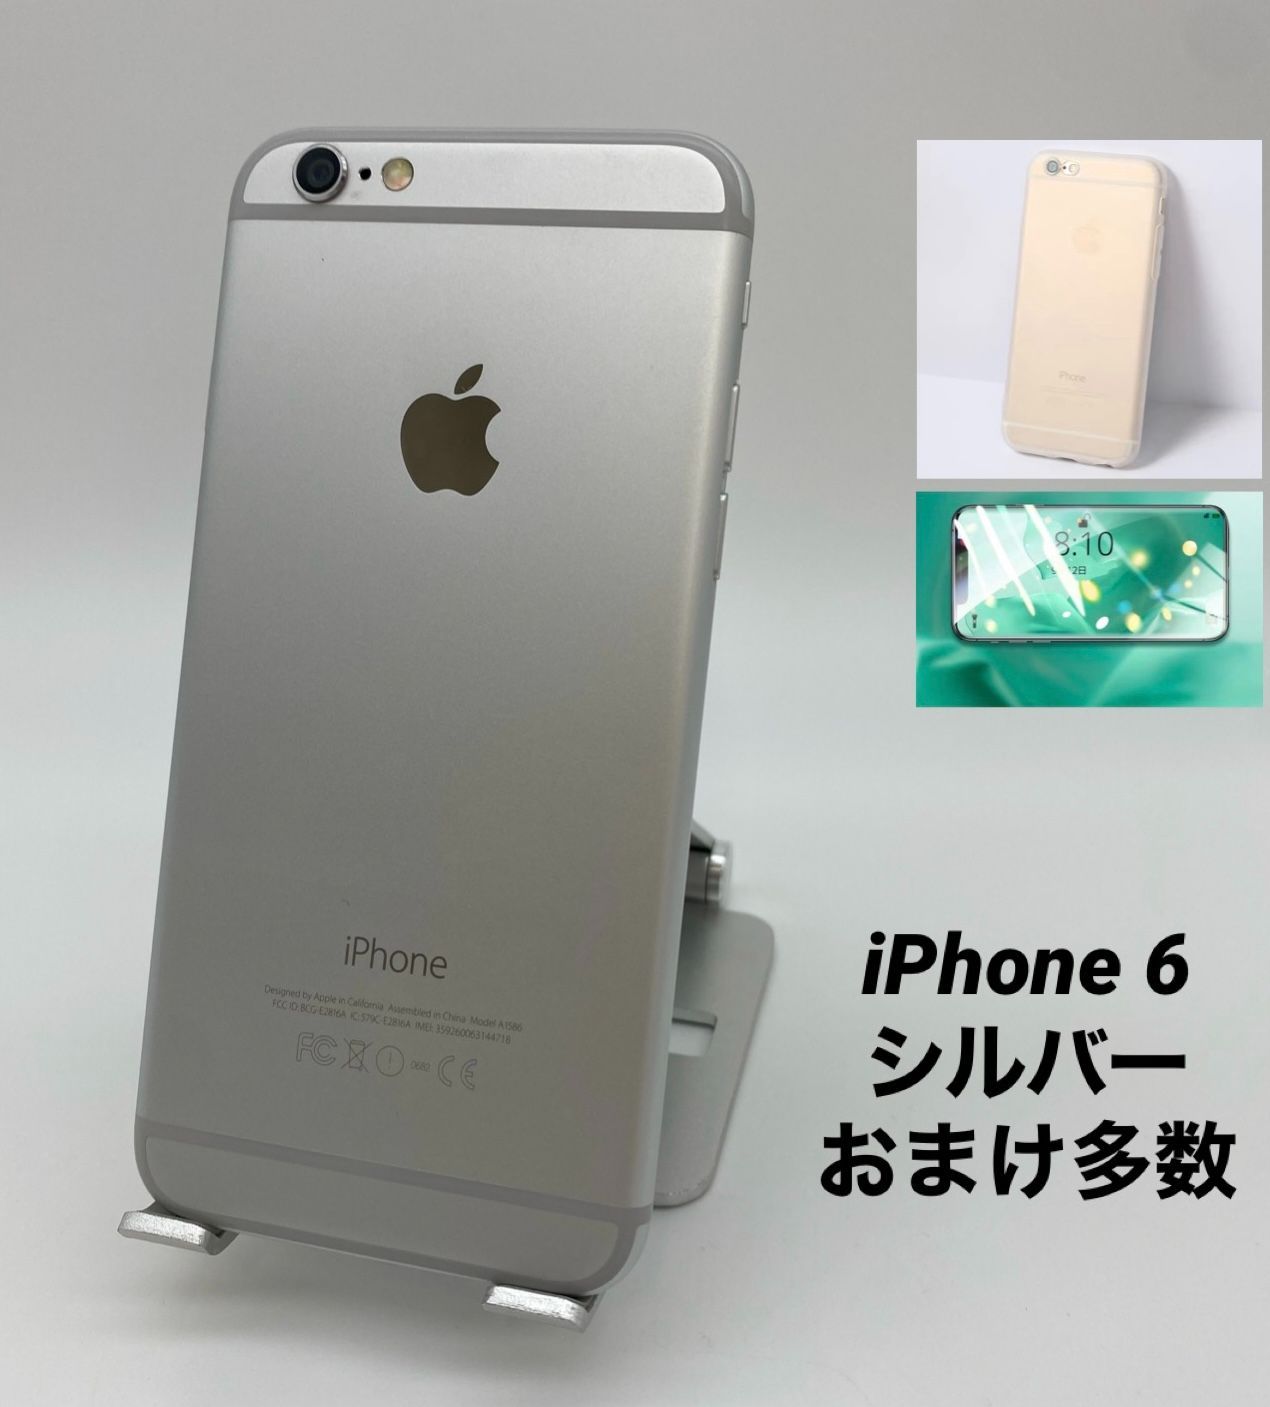 Apple iPhone6 16GB シルバー ドコモ Docomo - スマートフォン本体